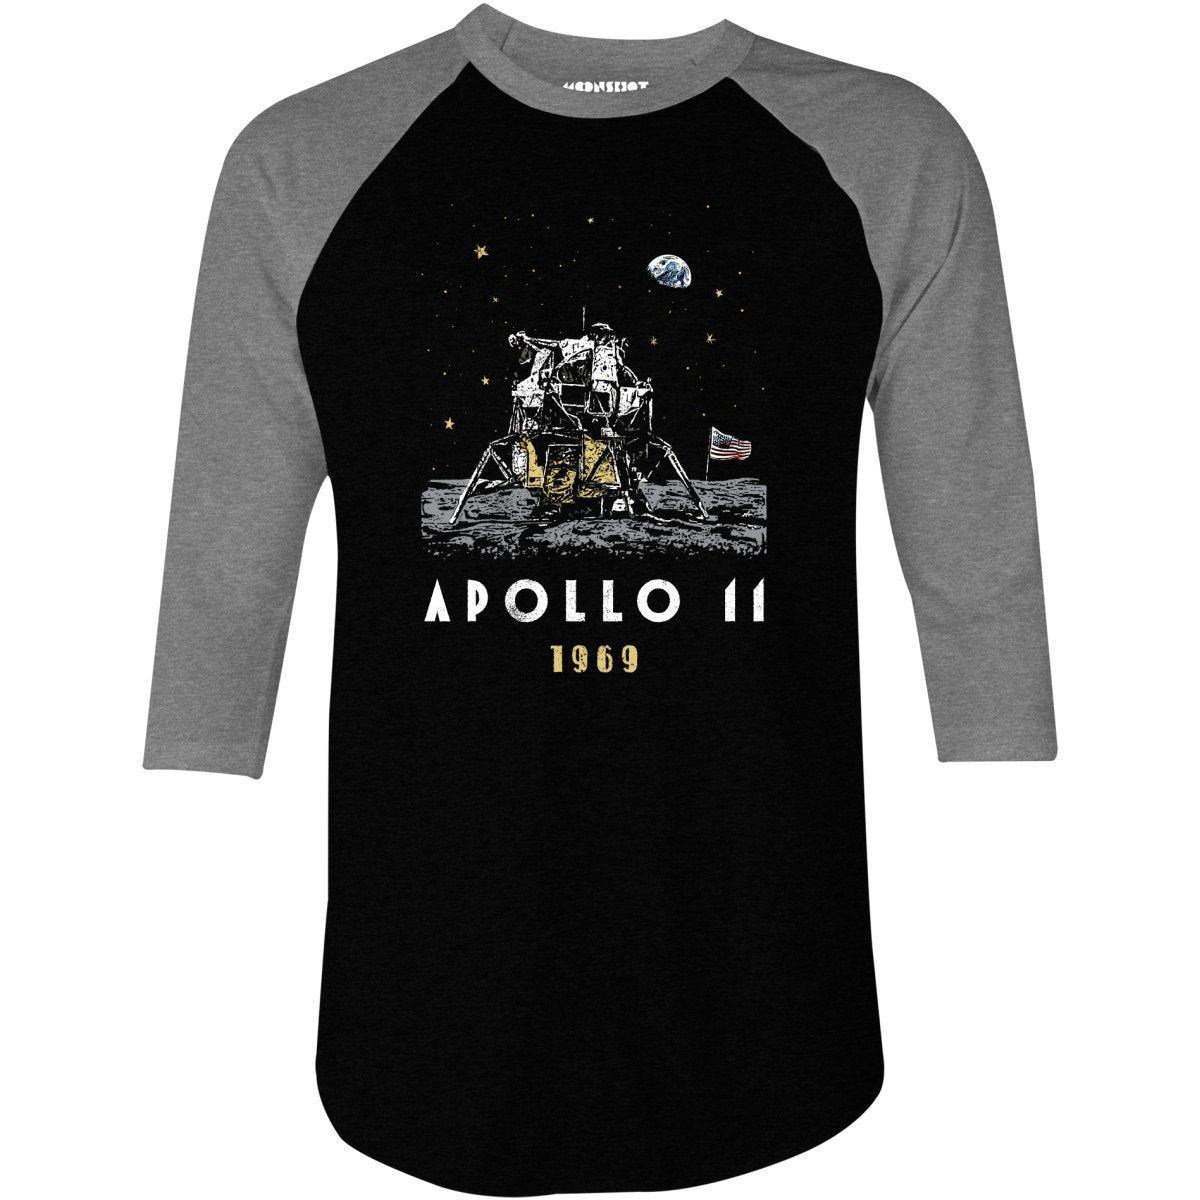 Apollo 11 - 3/4 Sleeve Raglan T-Shirt